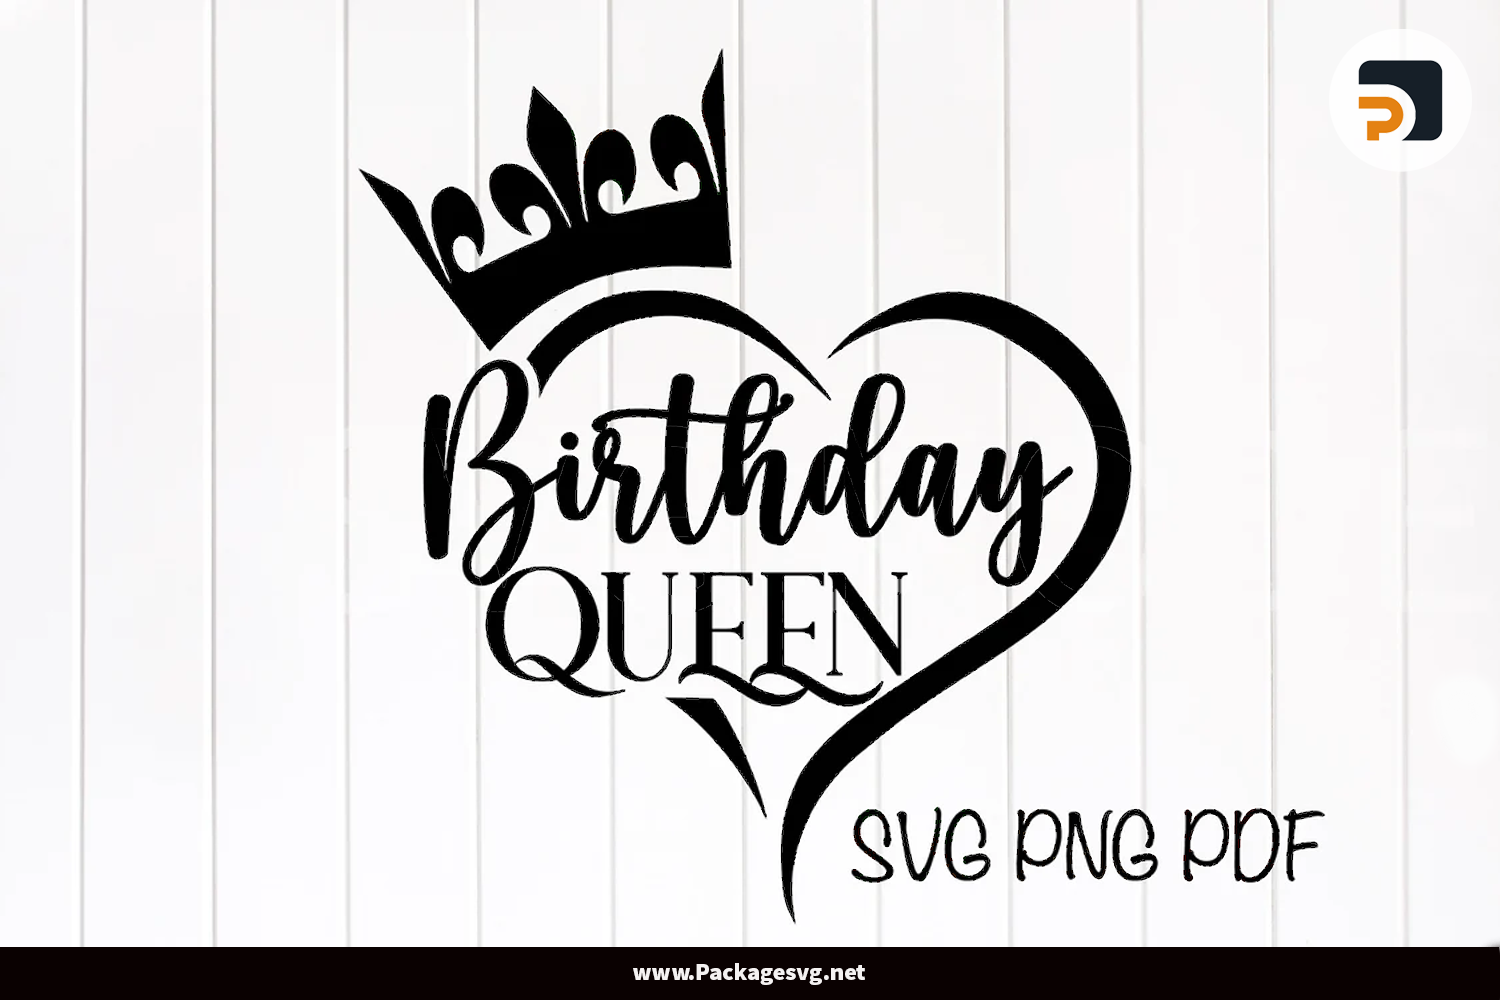 Birthday Queen SVG PNG PDF